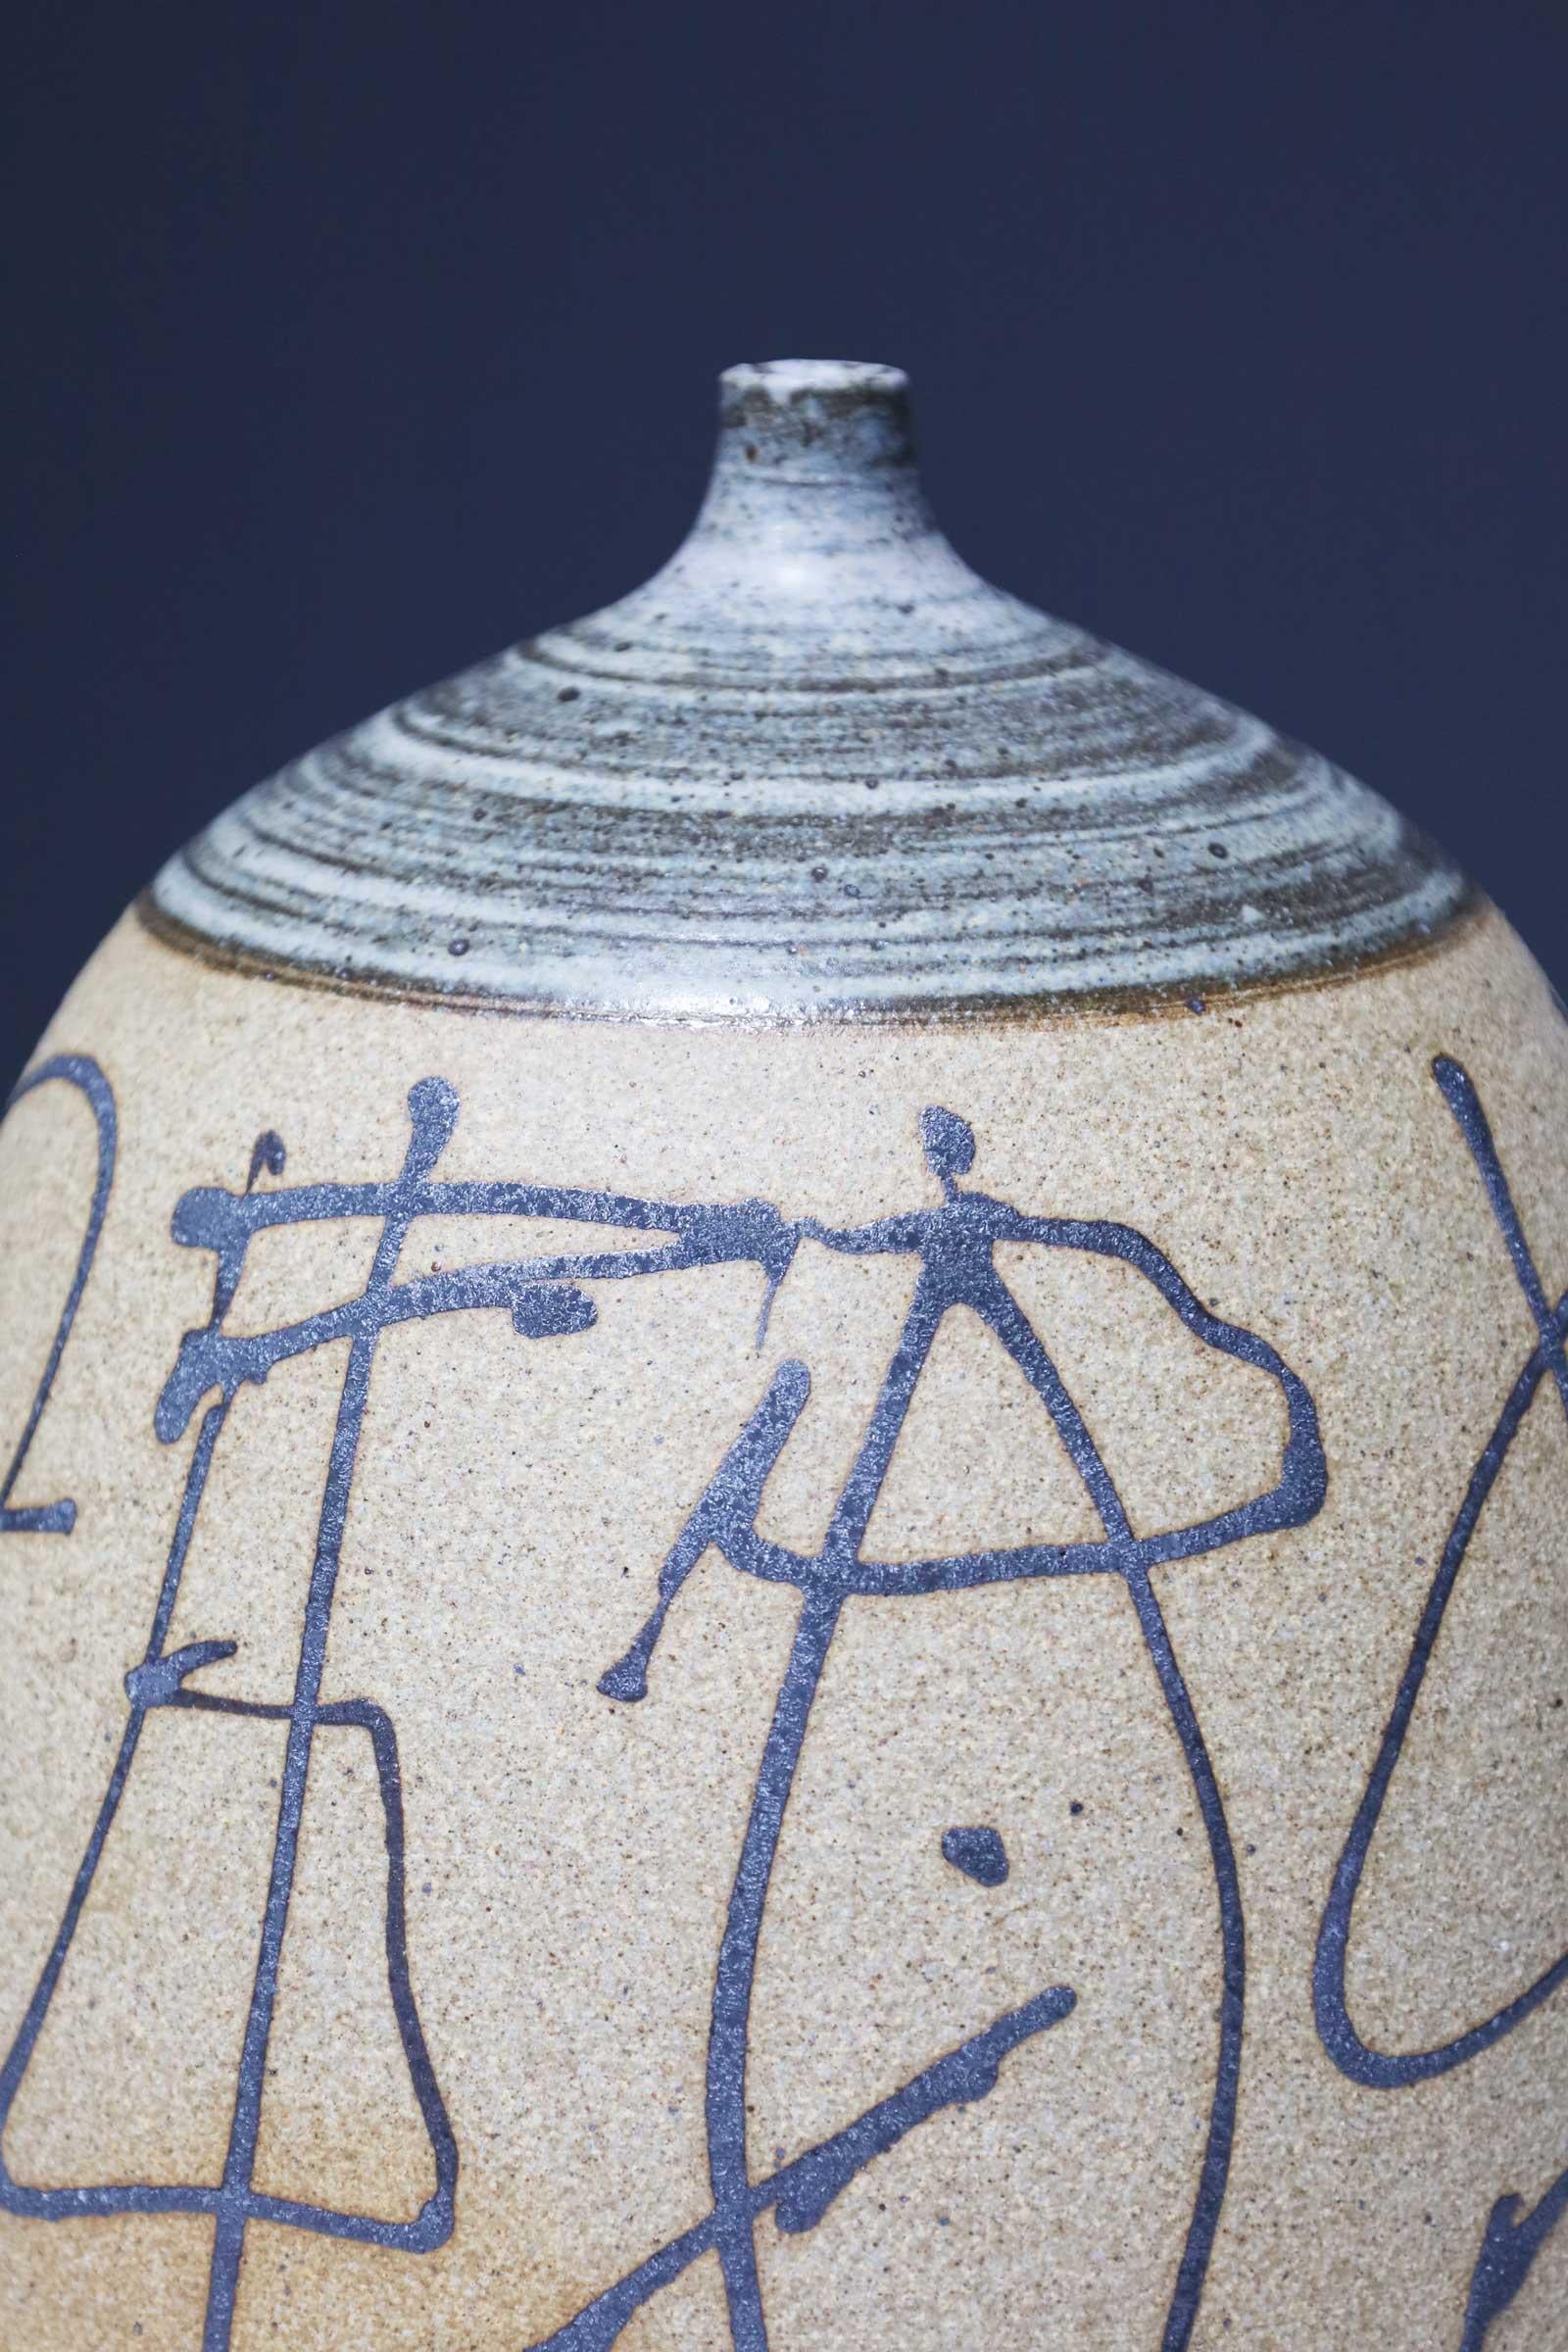 Beautiful ceramic vessel by Tim Keenan.